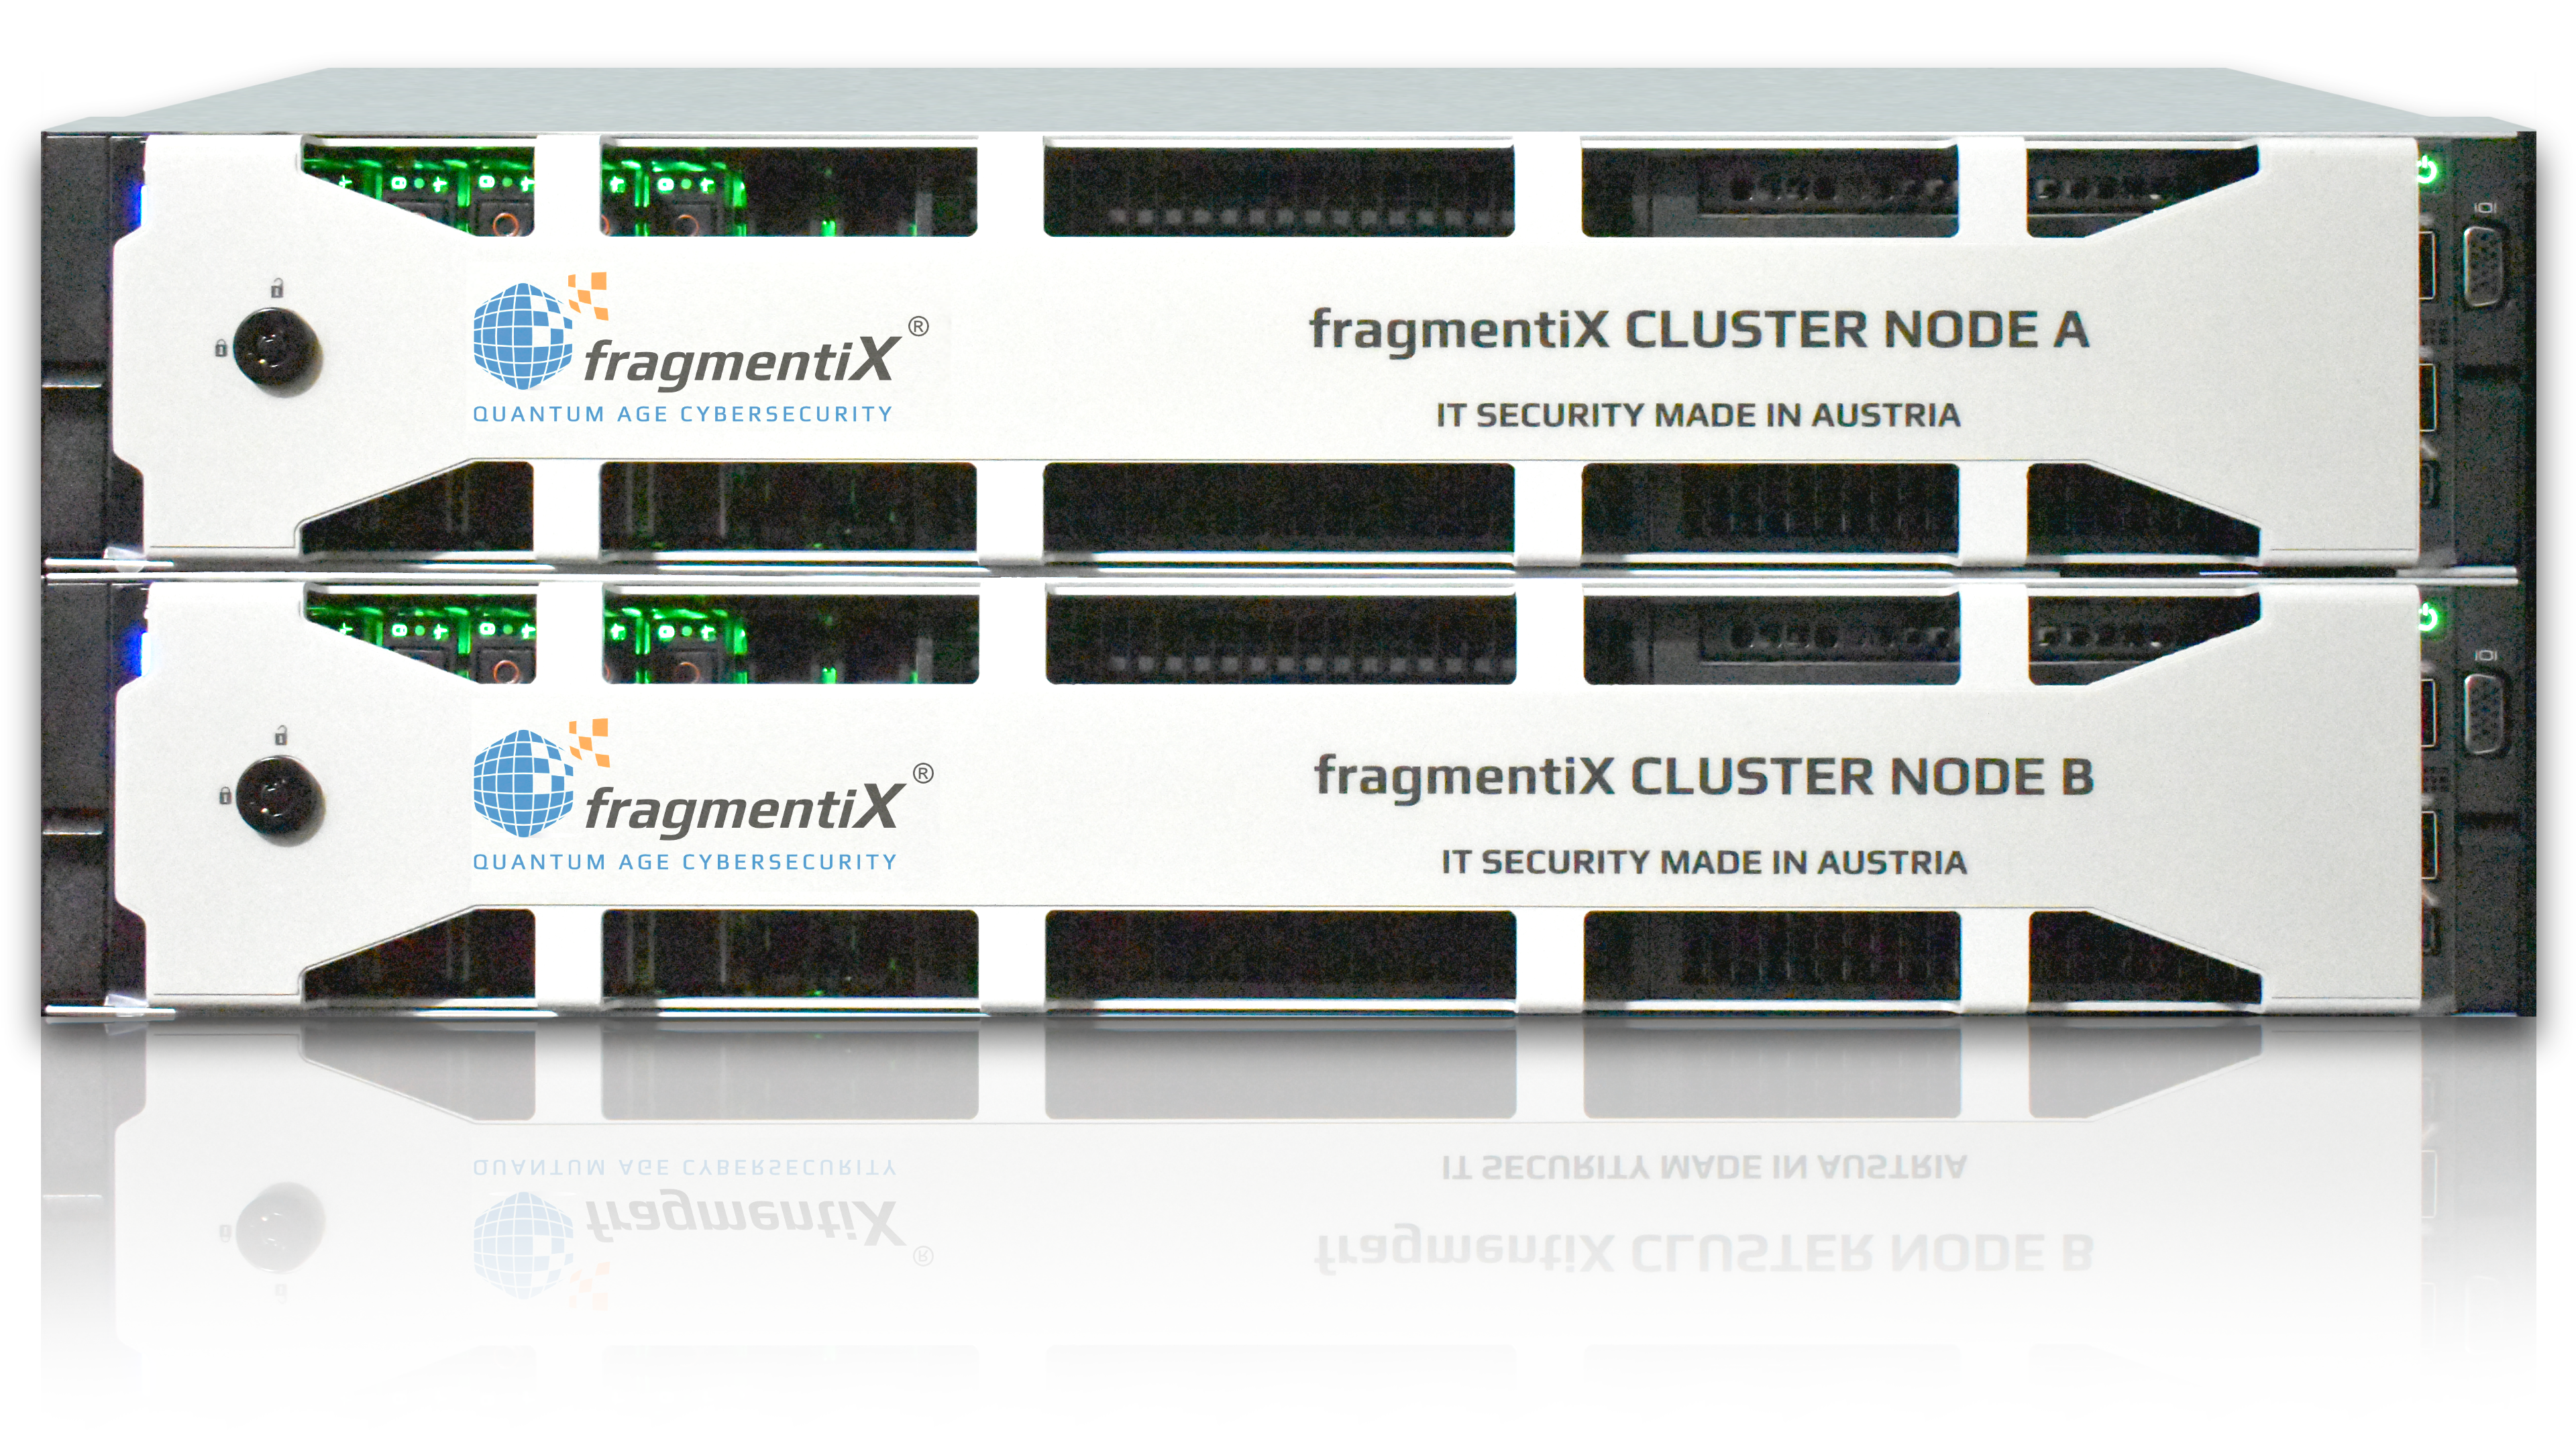 fragmentiX CLUSTER Node A & B